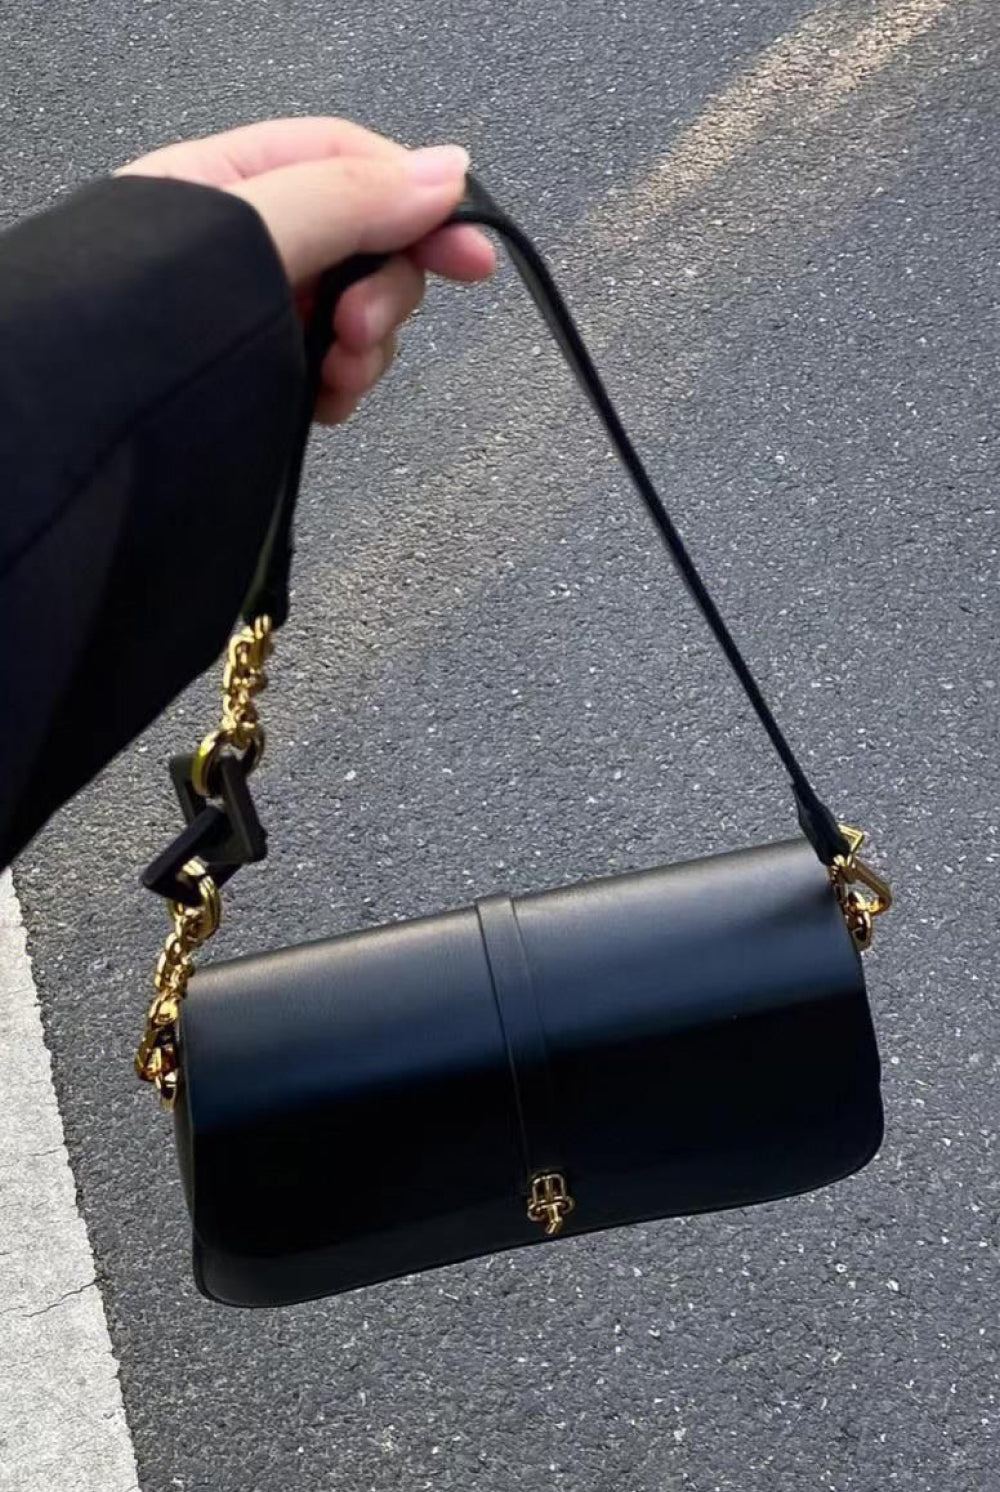 Slate Gray Adored PU Leather Shoulder Bag Handbags